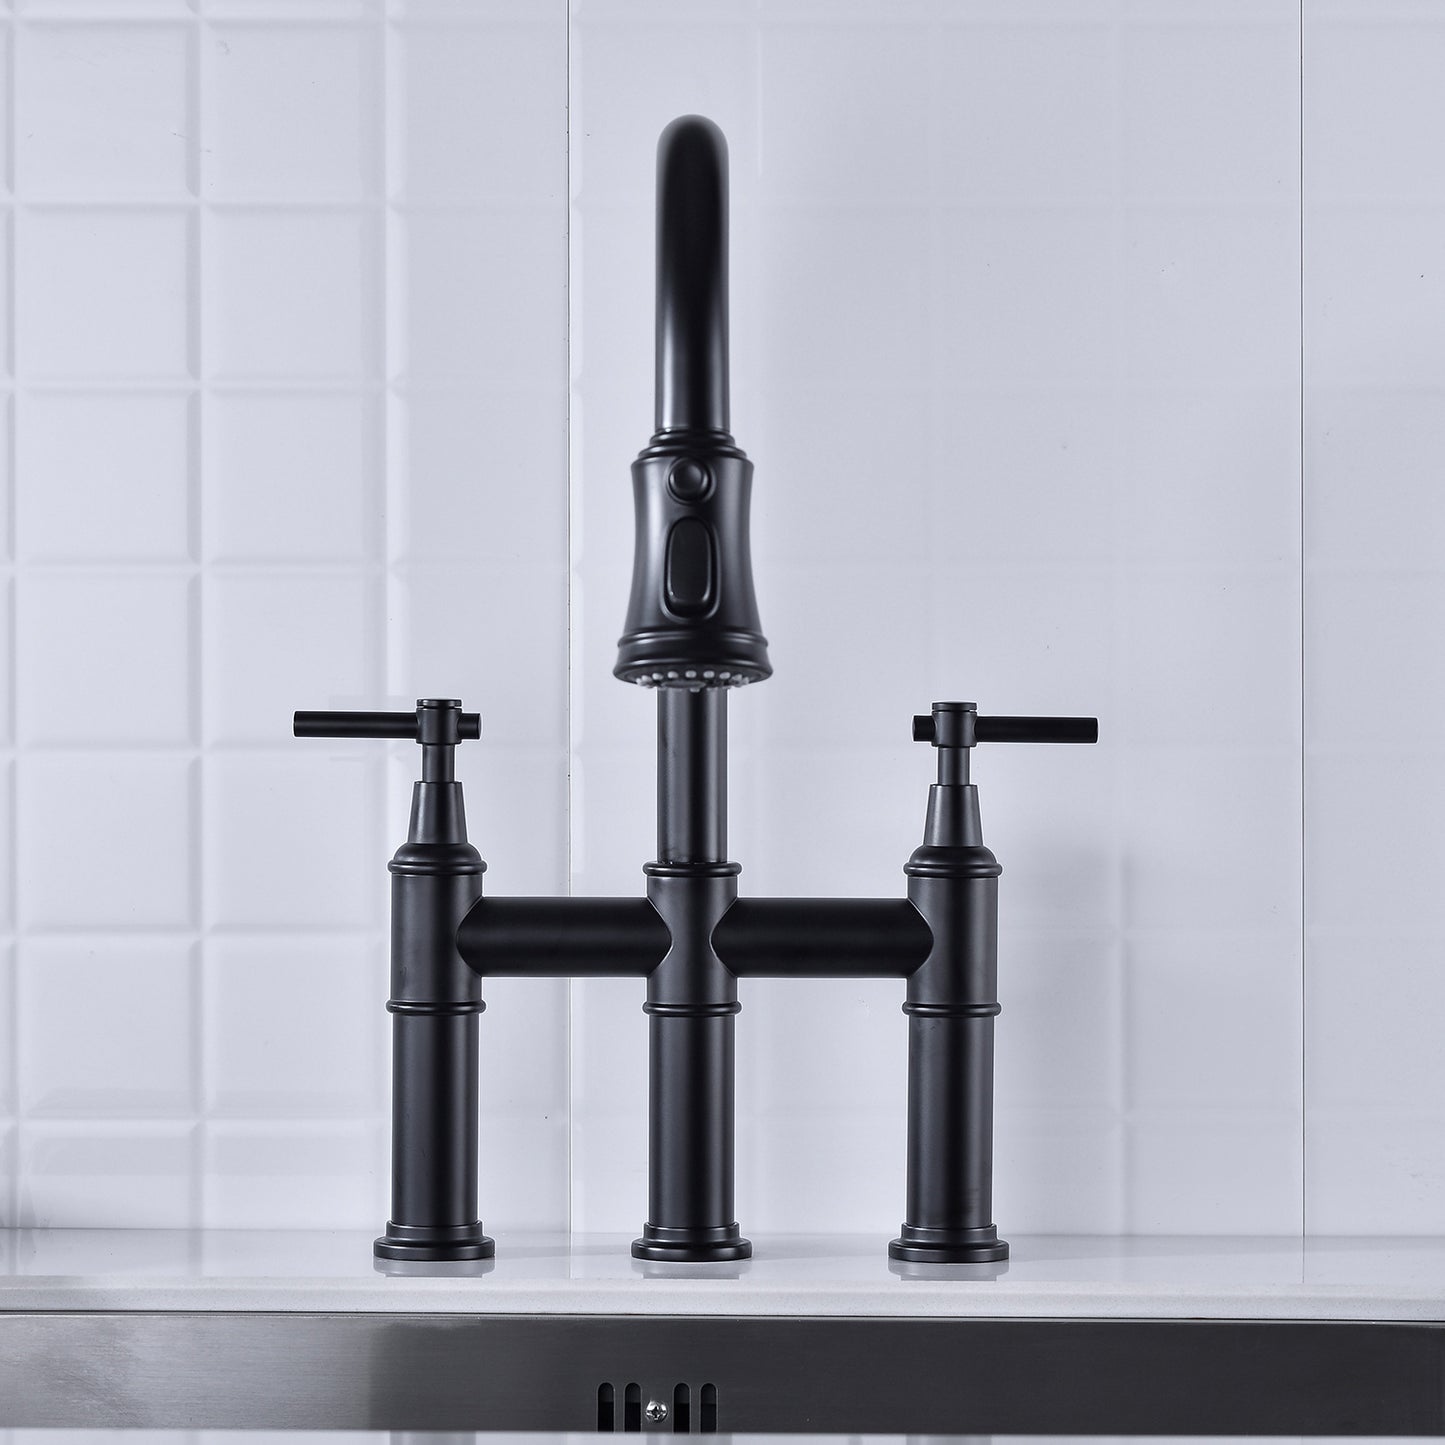 A|M Aquae Bridge Kitchen Faucet with Pull-Down Sprayhead in Spot